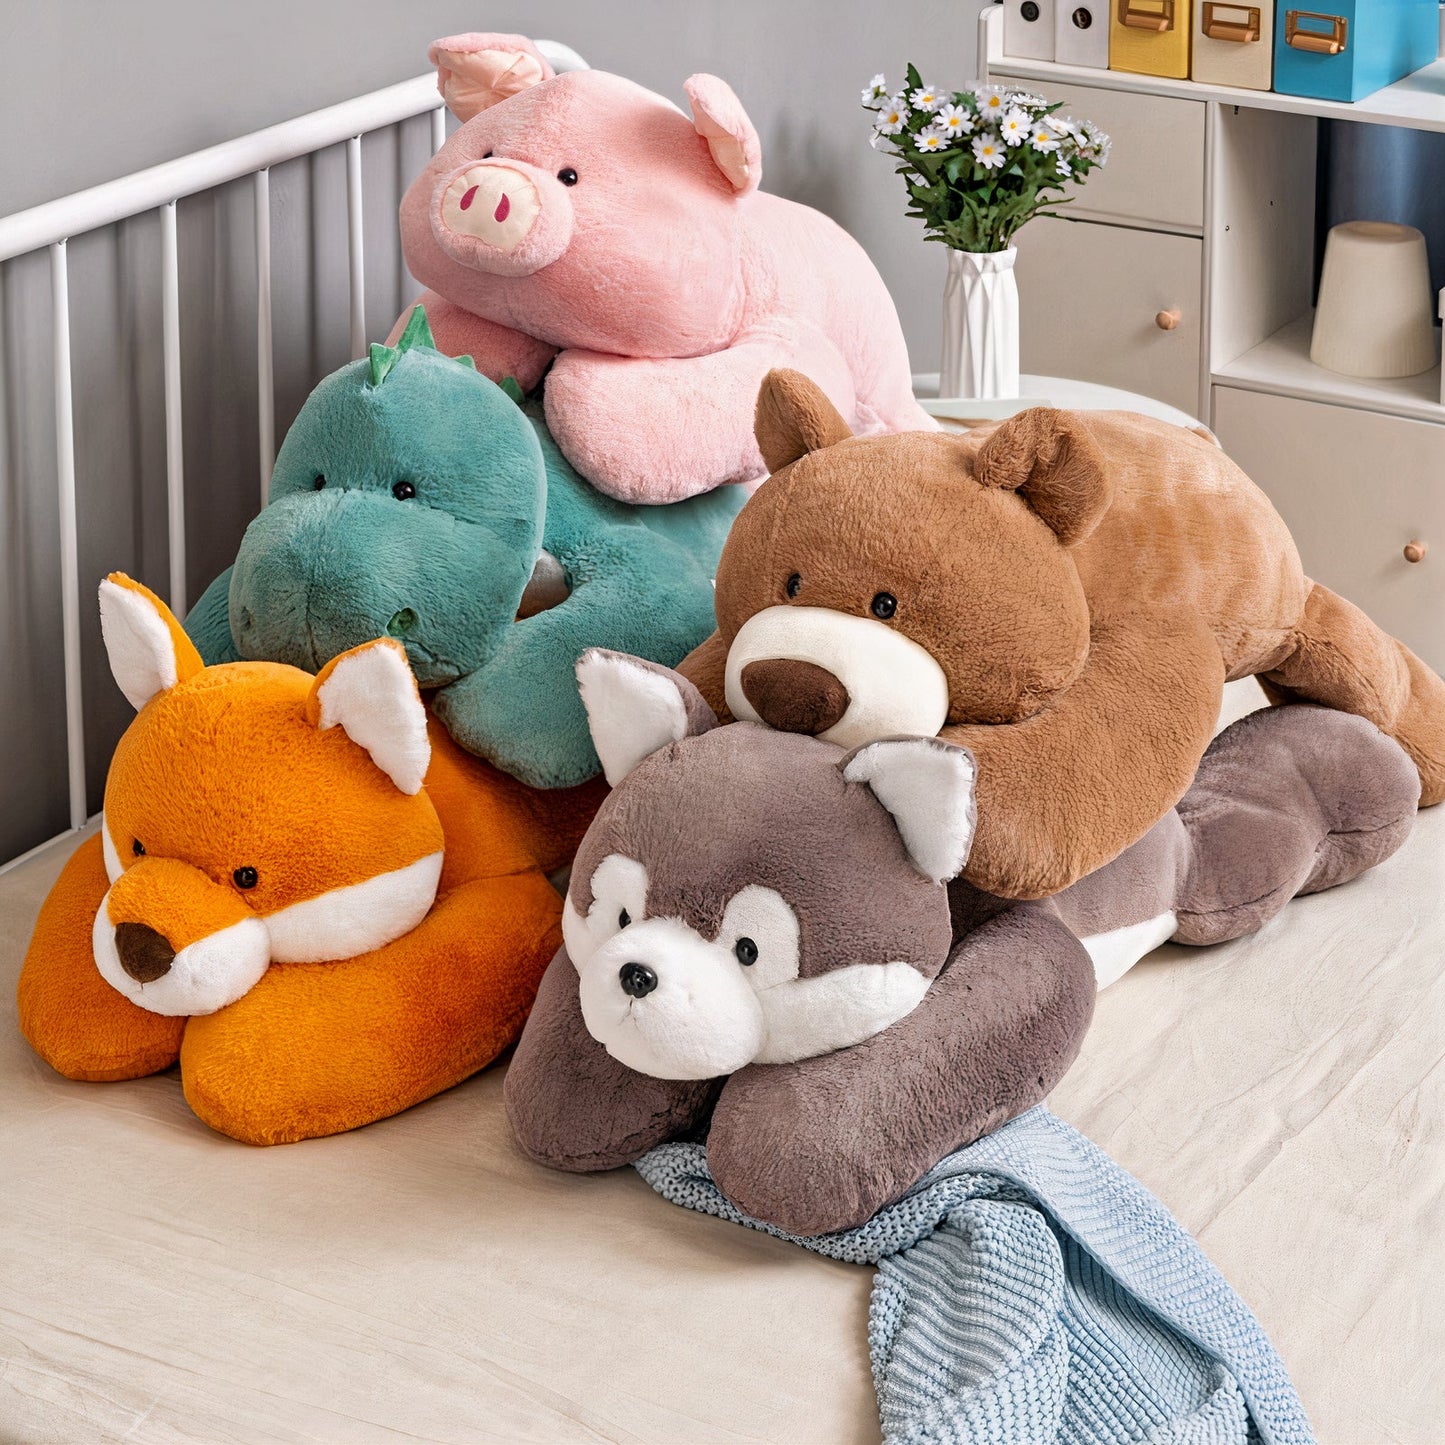 Plumpy Adorable Stuffed Animal Plushies